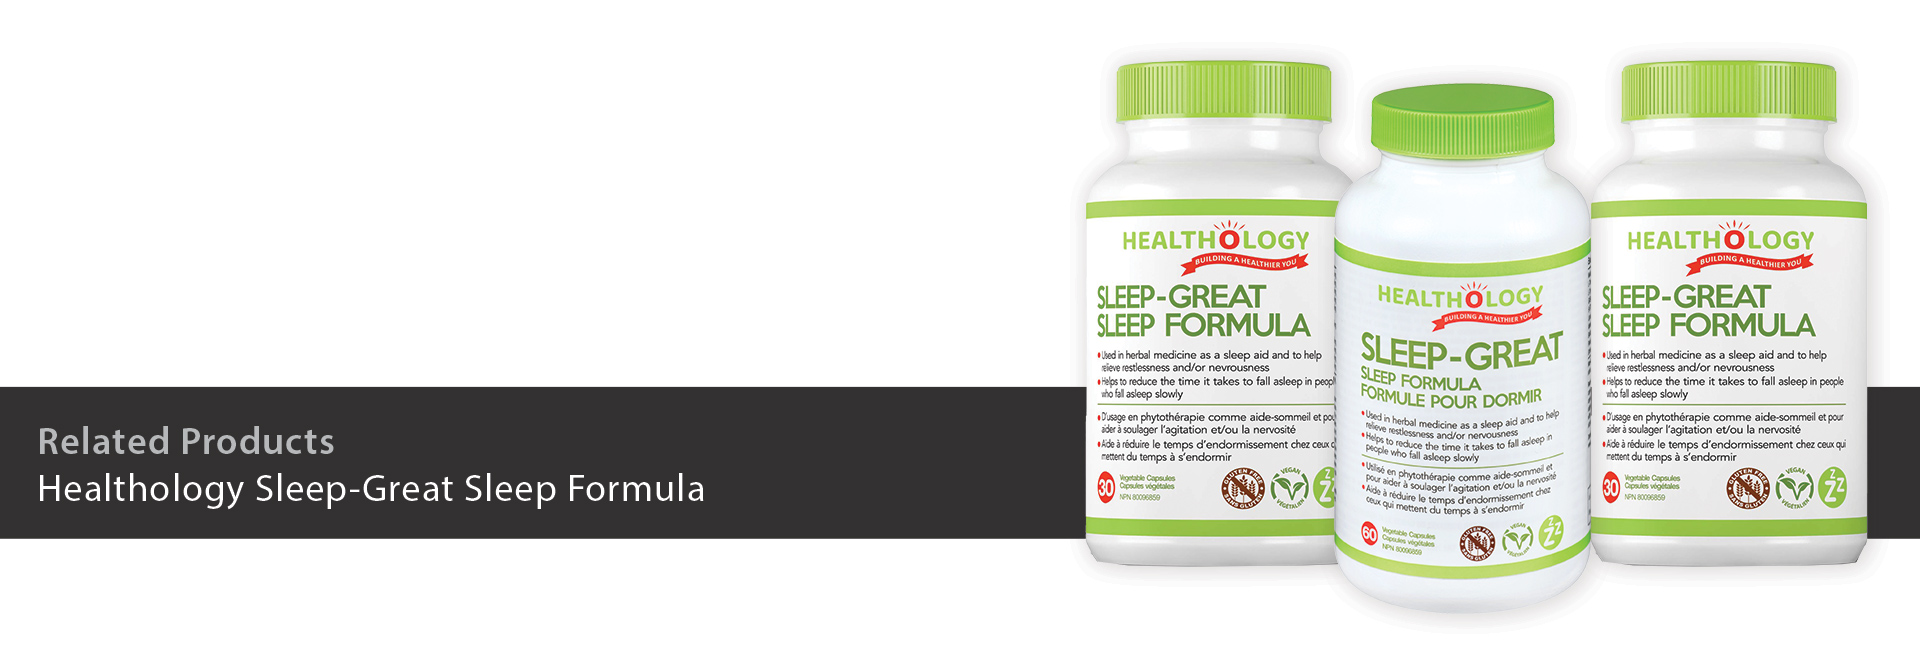 "Healthology Sleep-Great Sleep Formula"